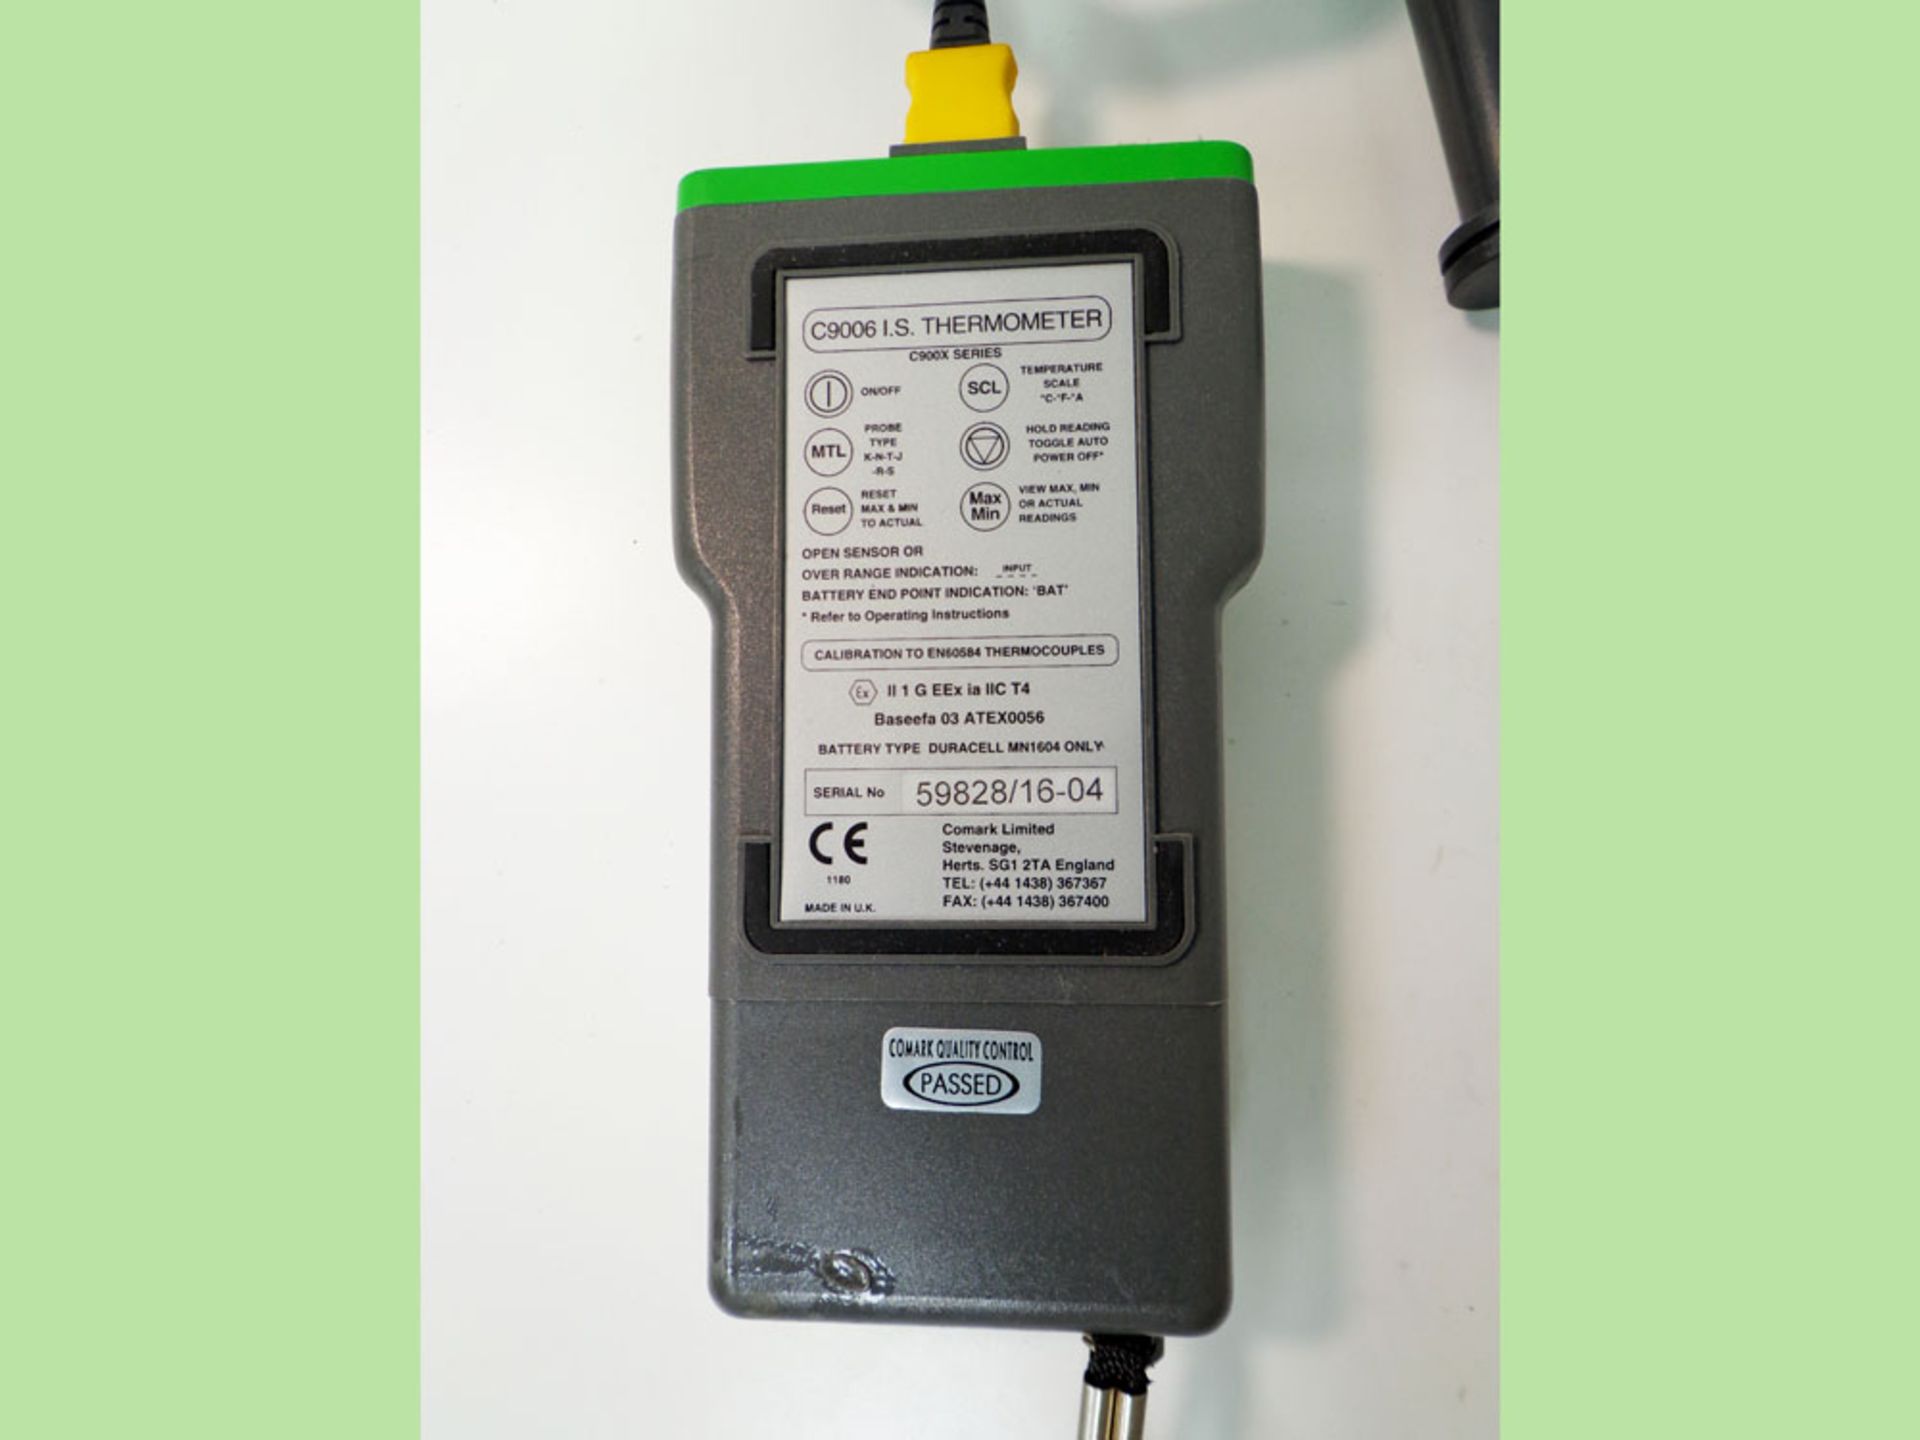 Comark C9006 I.S. Handheld Digital Thermometer, 1 Input, C900X series, S/N 59828/16-04 - Image 3 of 3